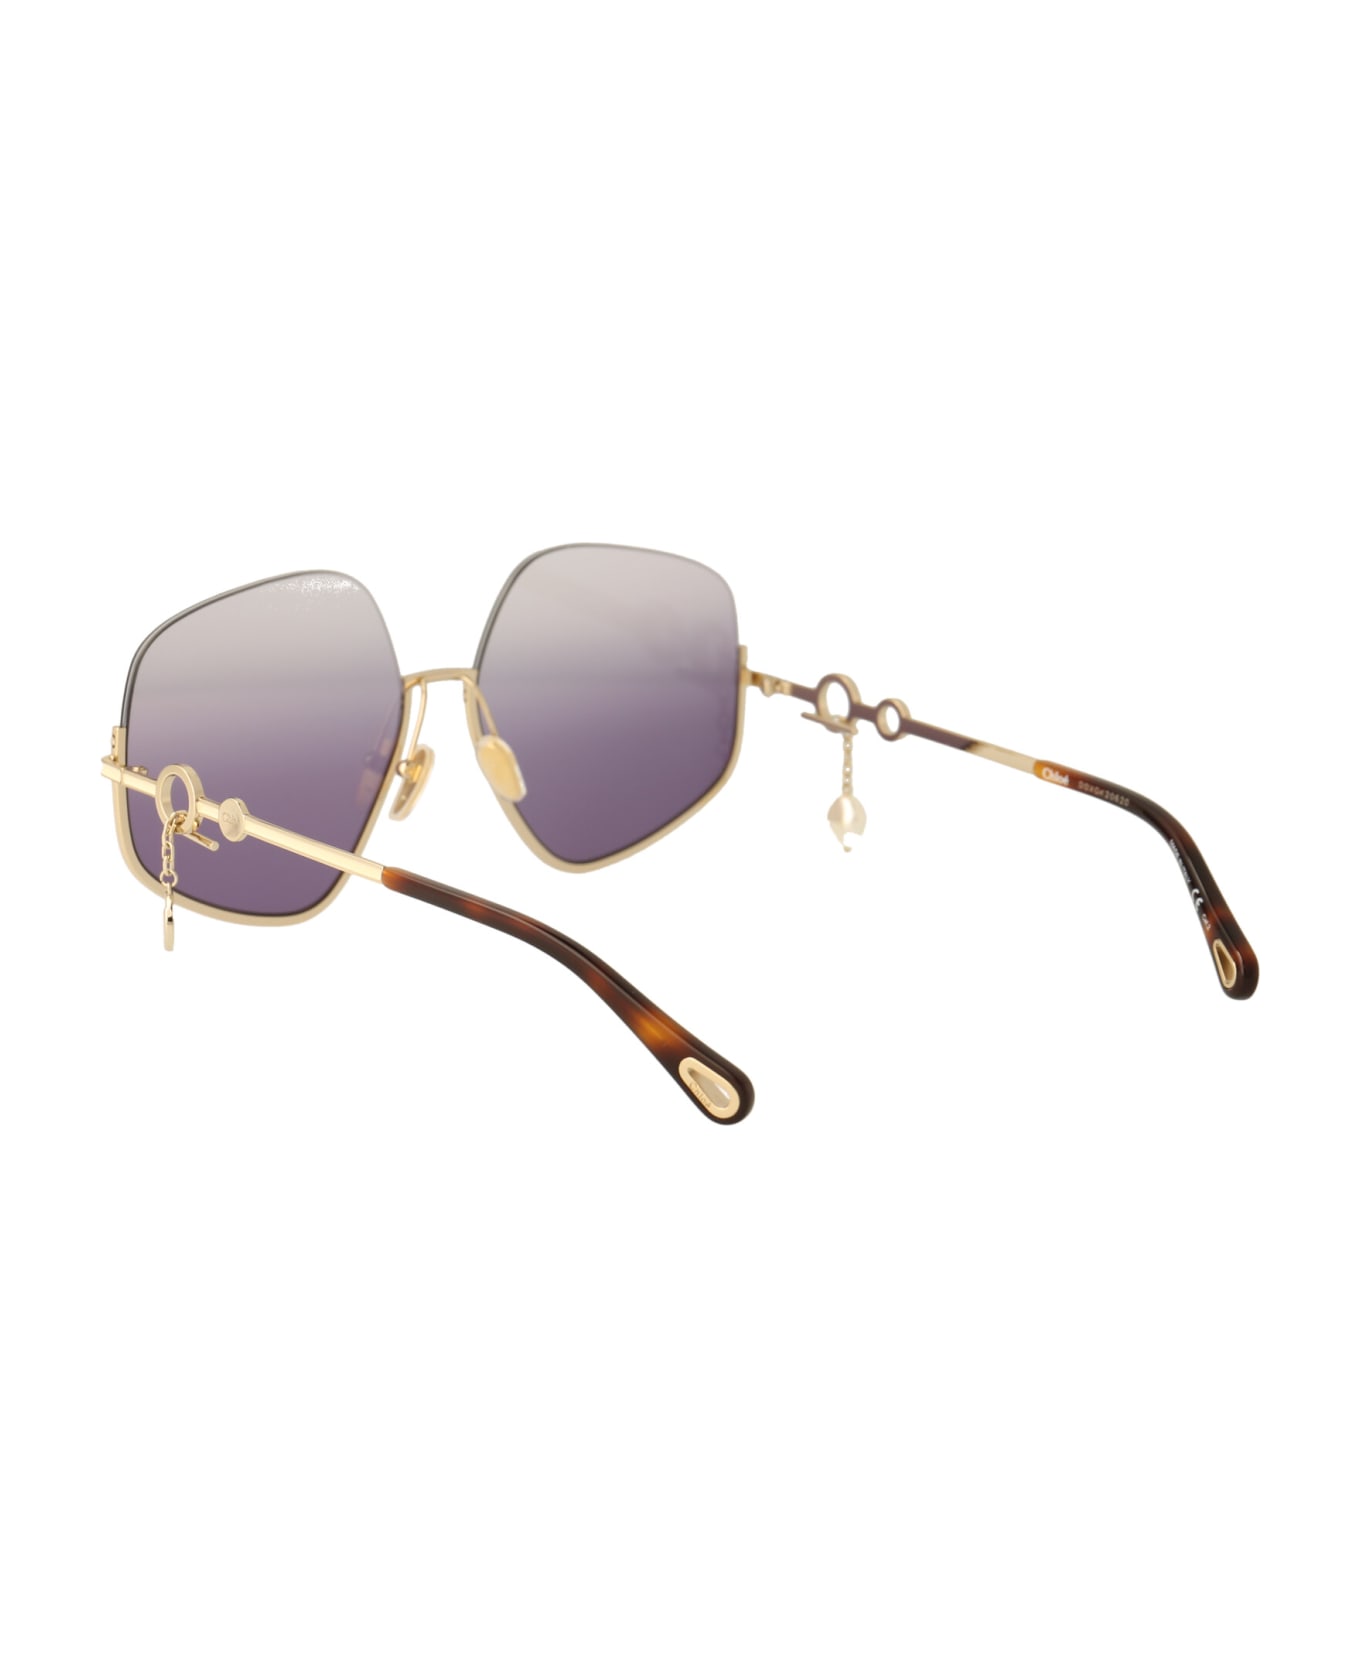 Chloé Eyewear Ch0068s Sunglasses - 004 GOLD GOLD VIOLET